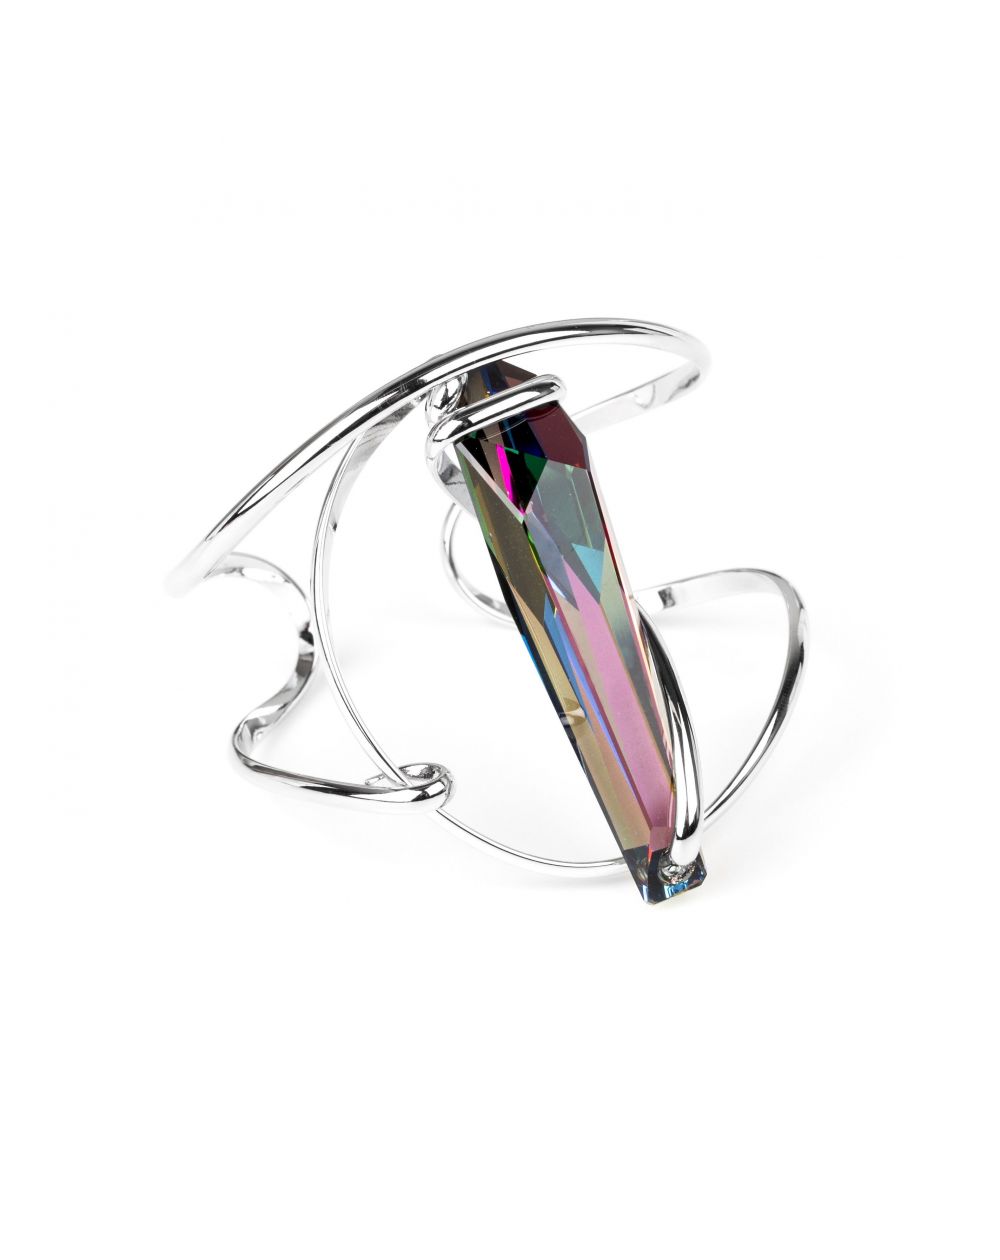 Marazzini - STALATTITE crystal bracelet Swarovski